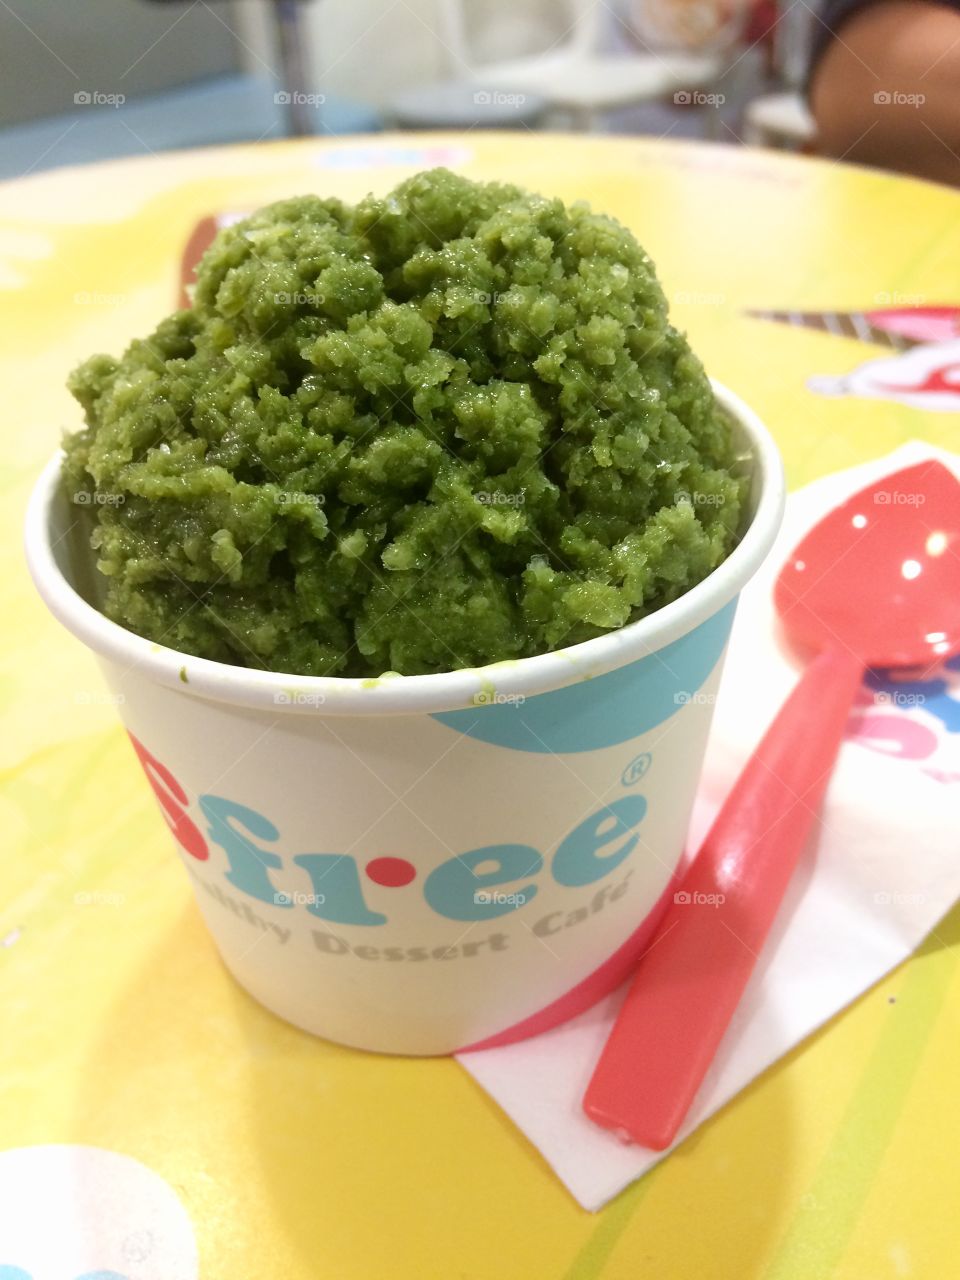 #icecream #greentea #matcha #glicter #yummy #tea #lowsugar